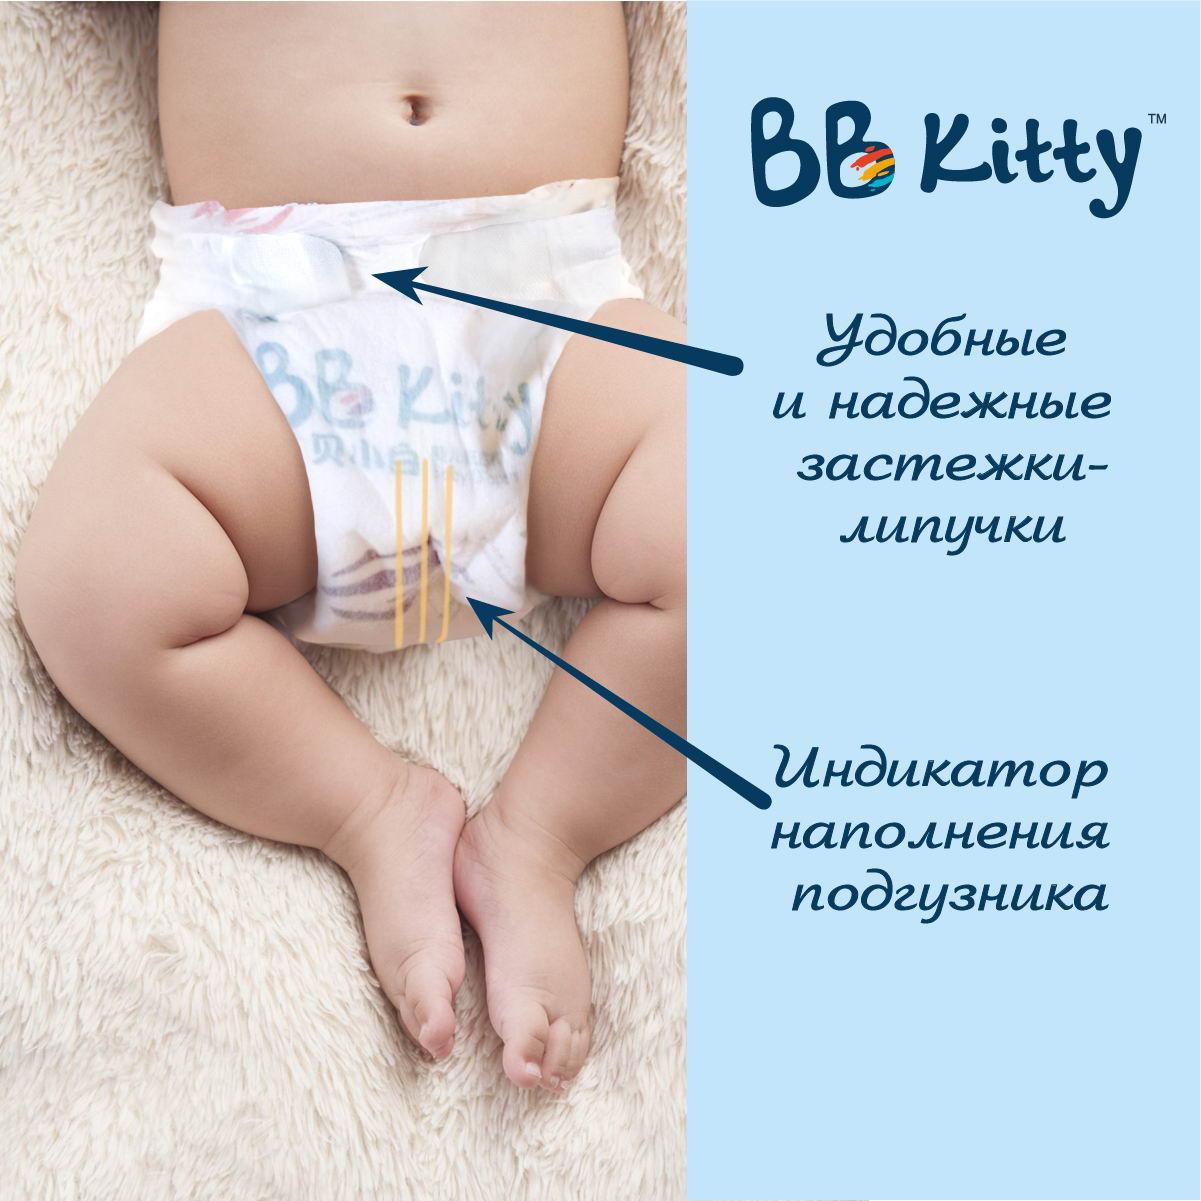 Подгузники BB Kitty Премиум для новорожденных ( 0-5 кг ) с вырезом под пуповину 32 штуки - фото 5